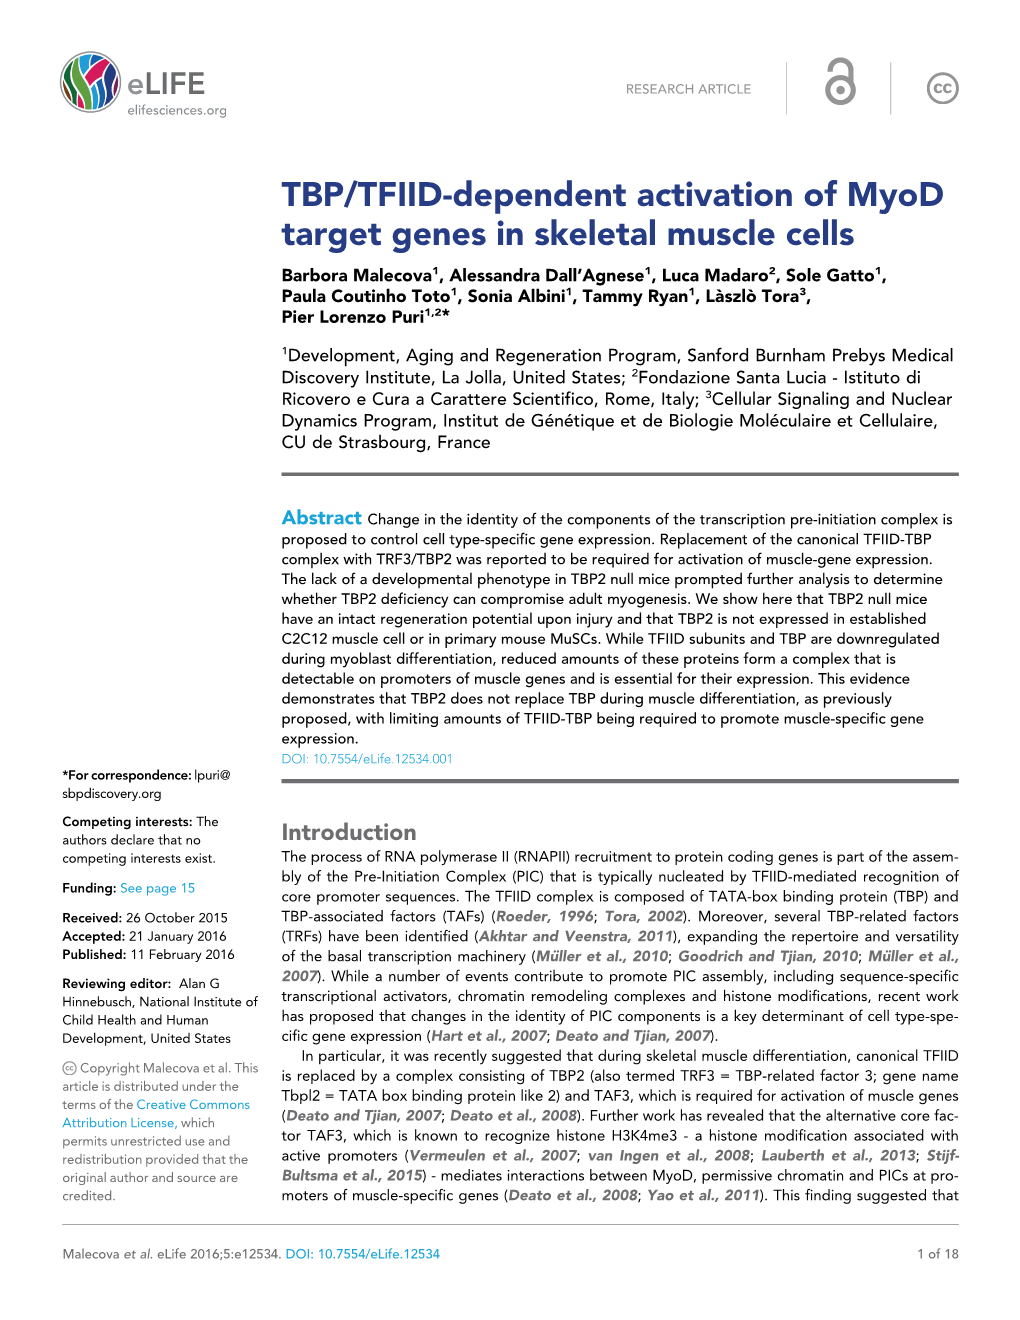 TBP/TFIID-Dependent Activation of Myod Target Genes in Skeletal